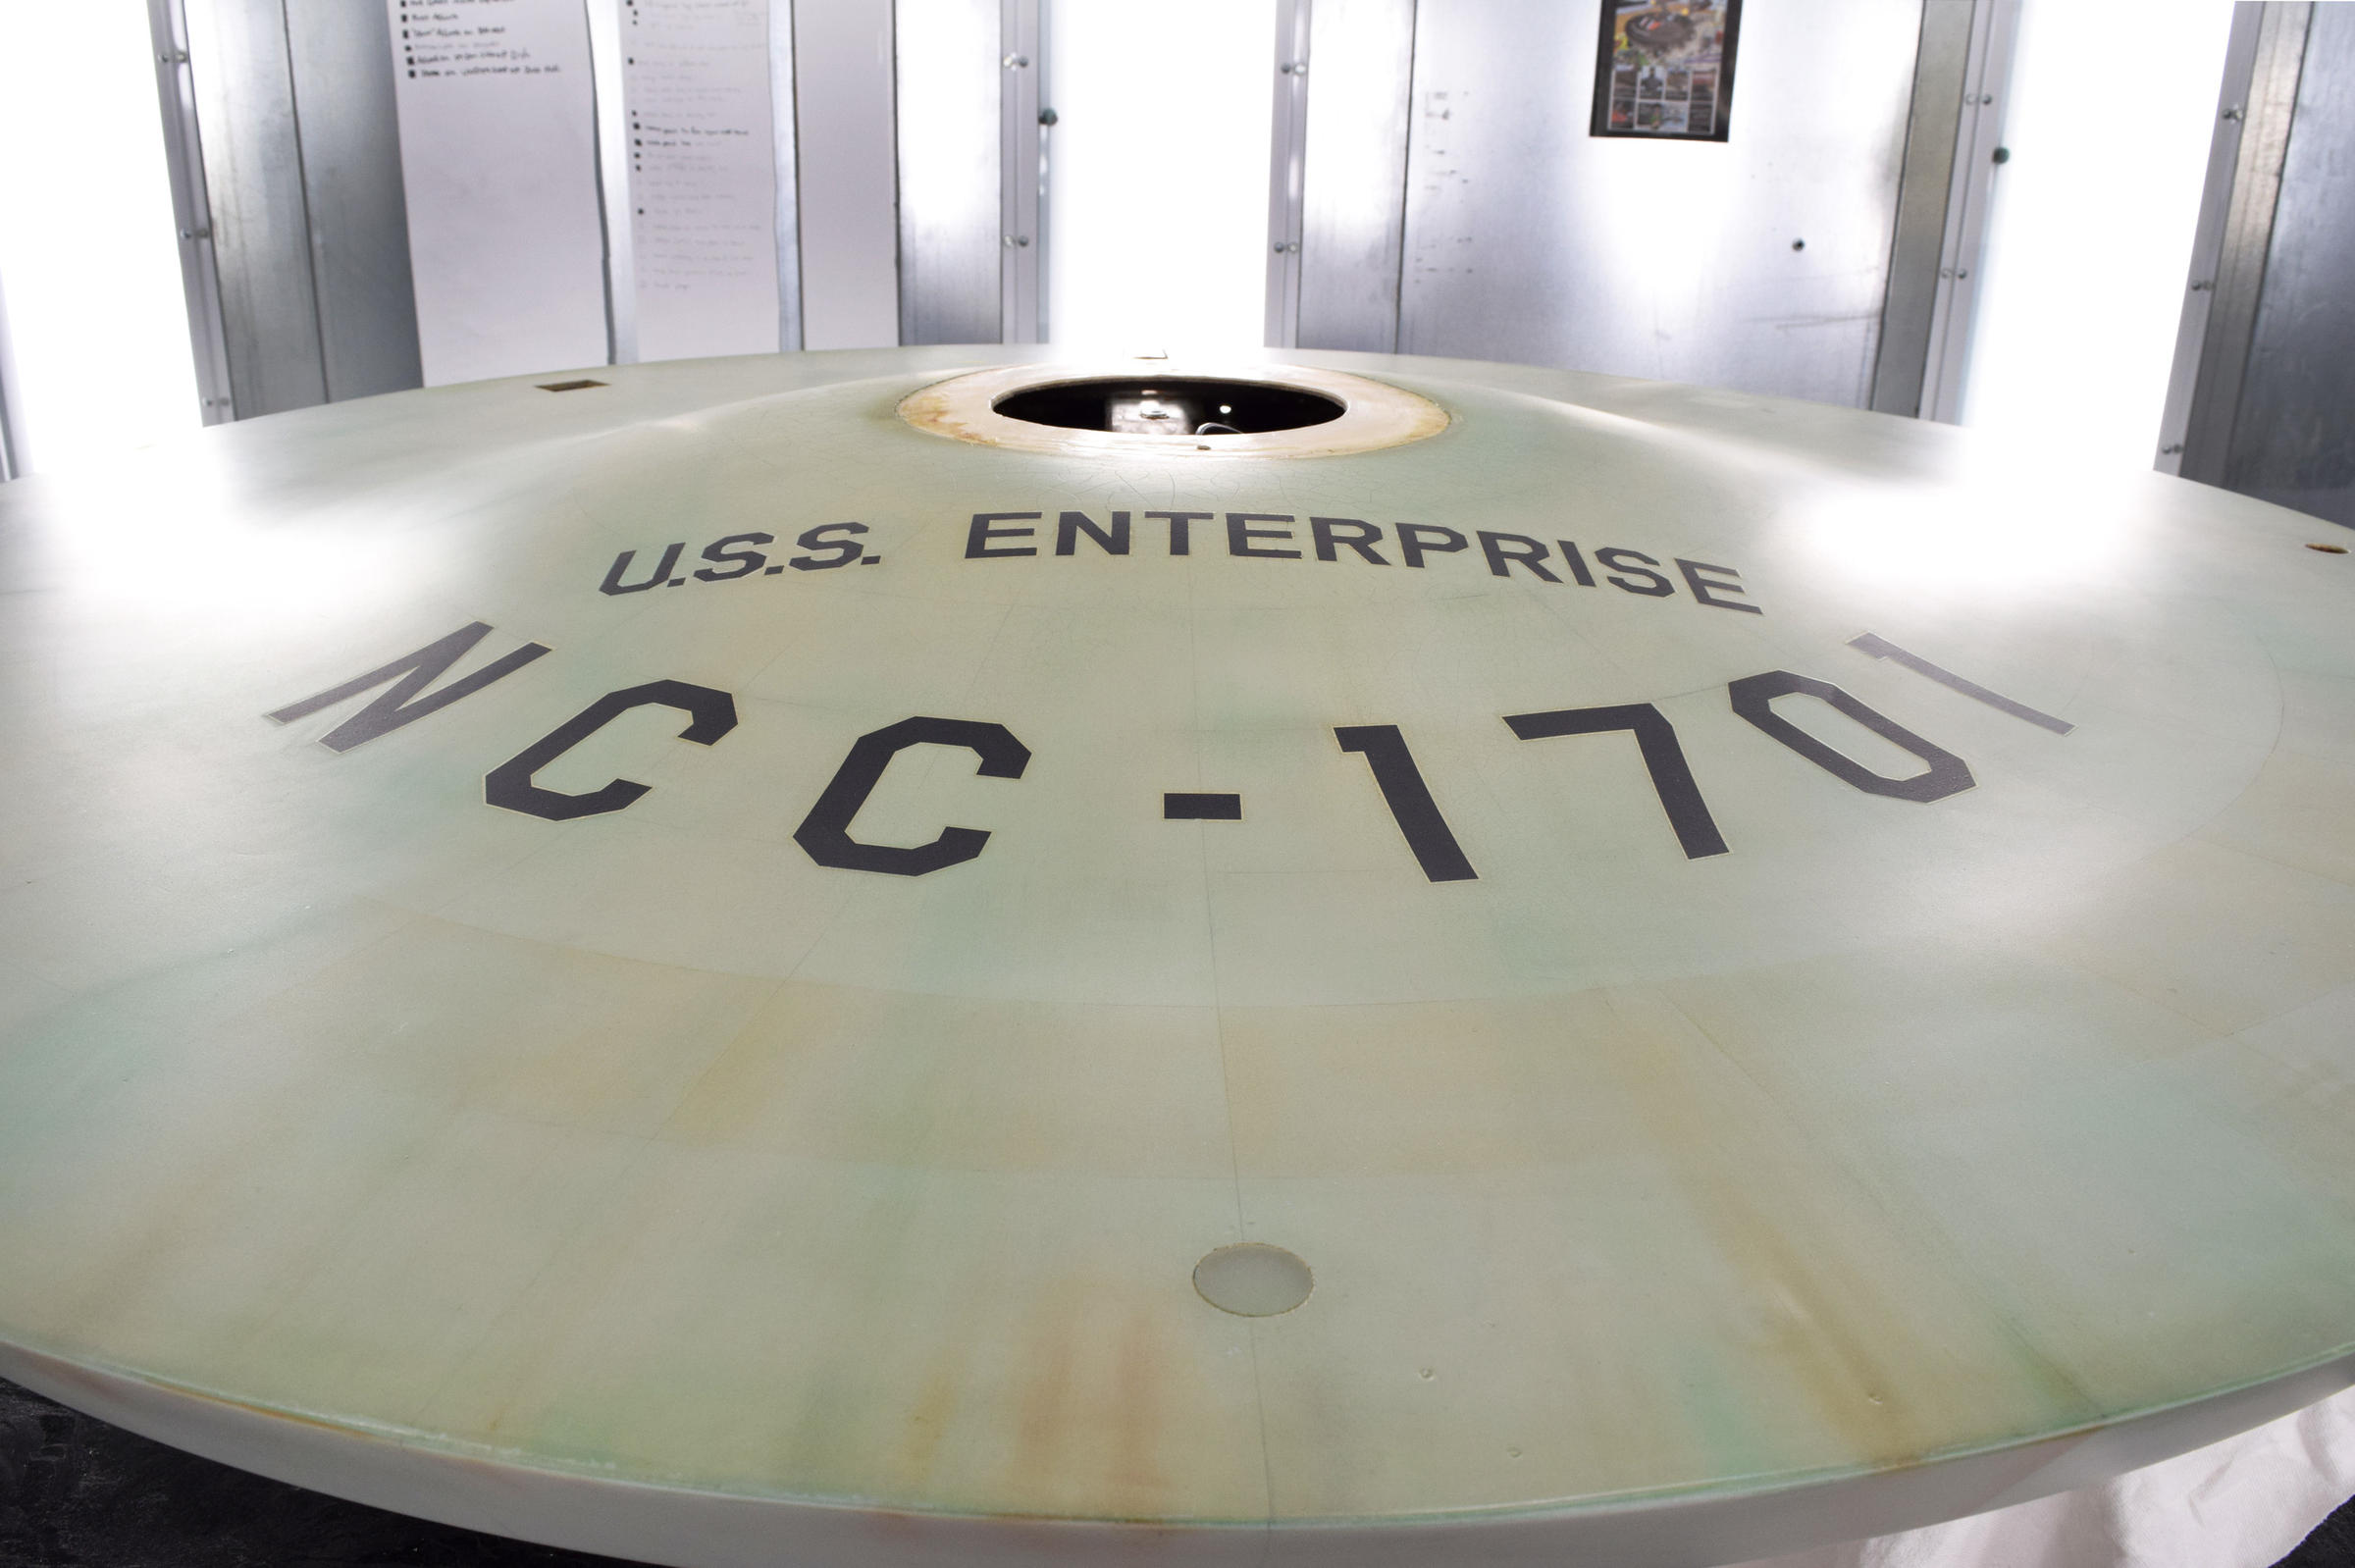 Star Trek Enterprise Program Schedule